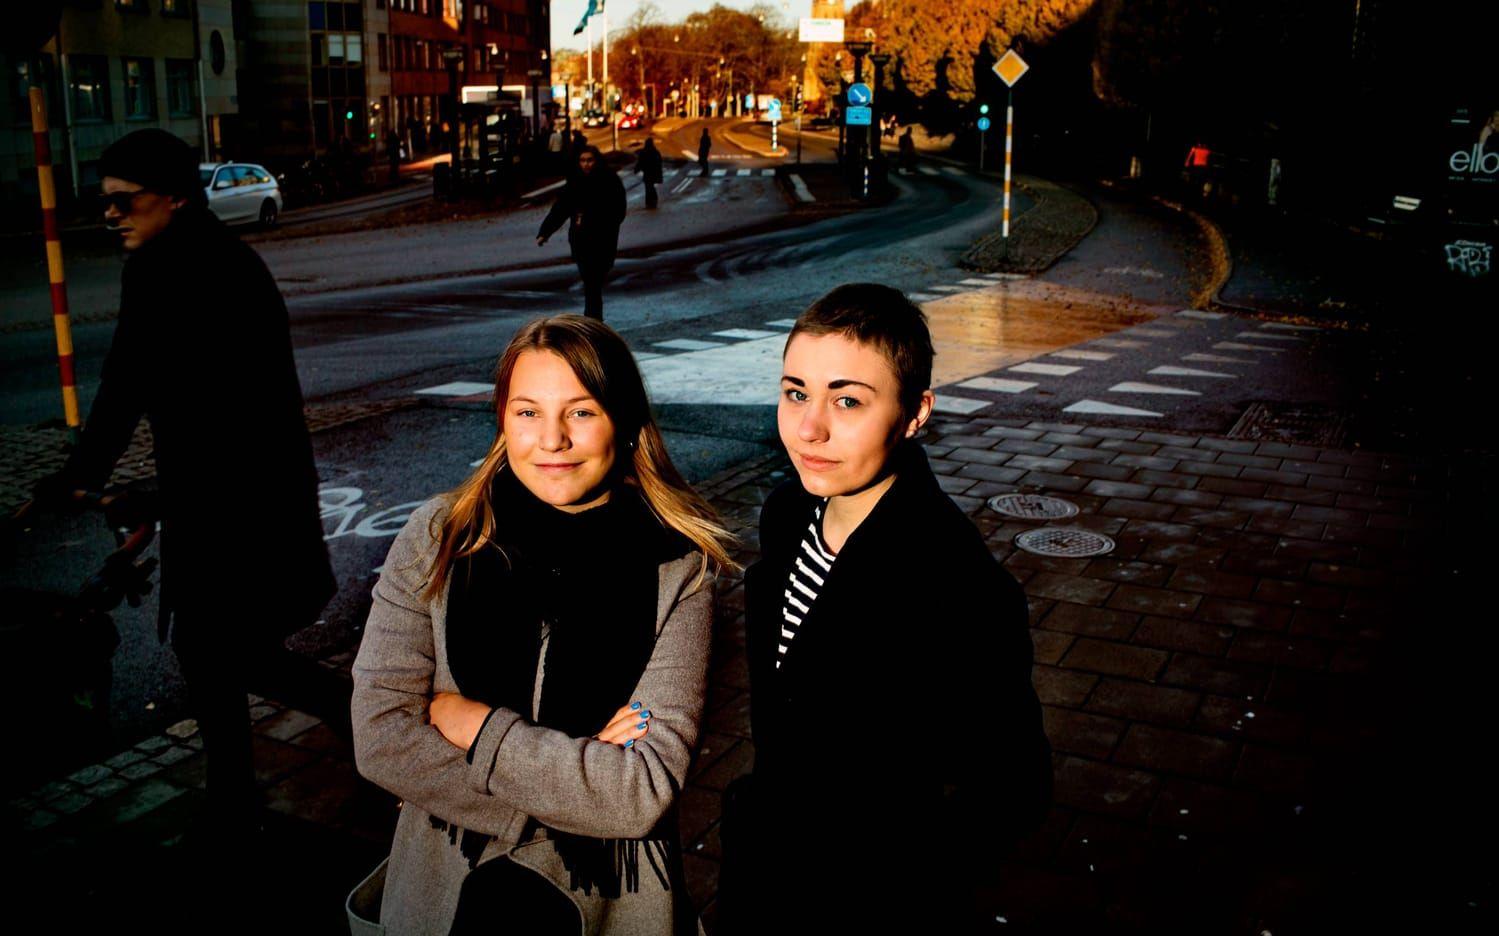 Juriststudenterna Kristin Busterud Öhman och Mikaela von Bornstedt. Bild: Per Wahlberg.